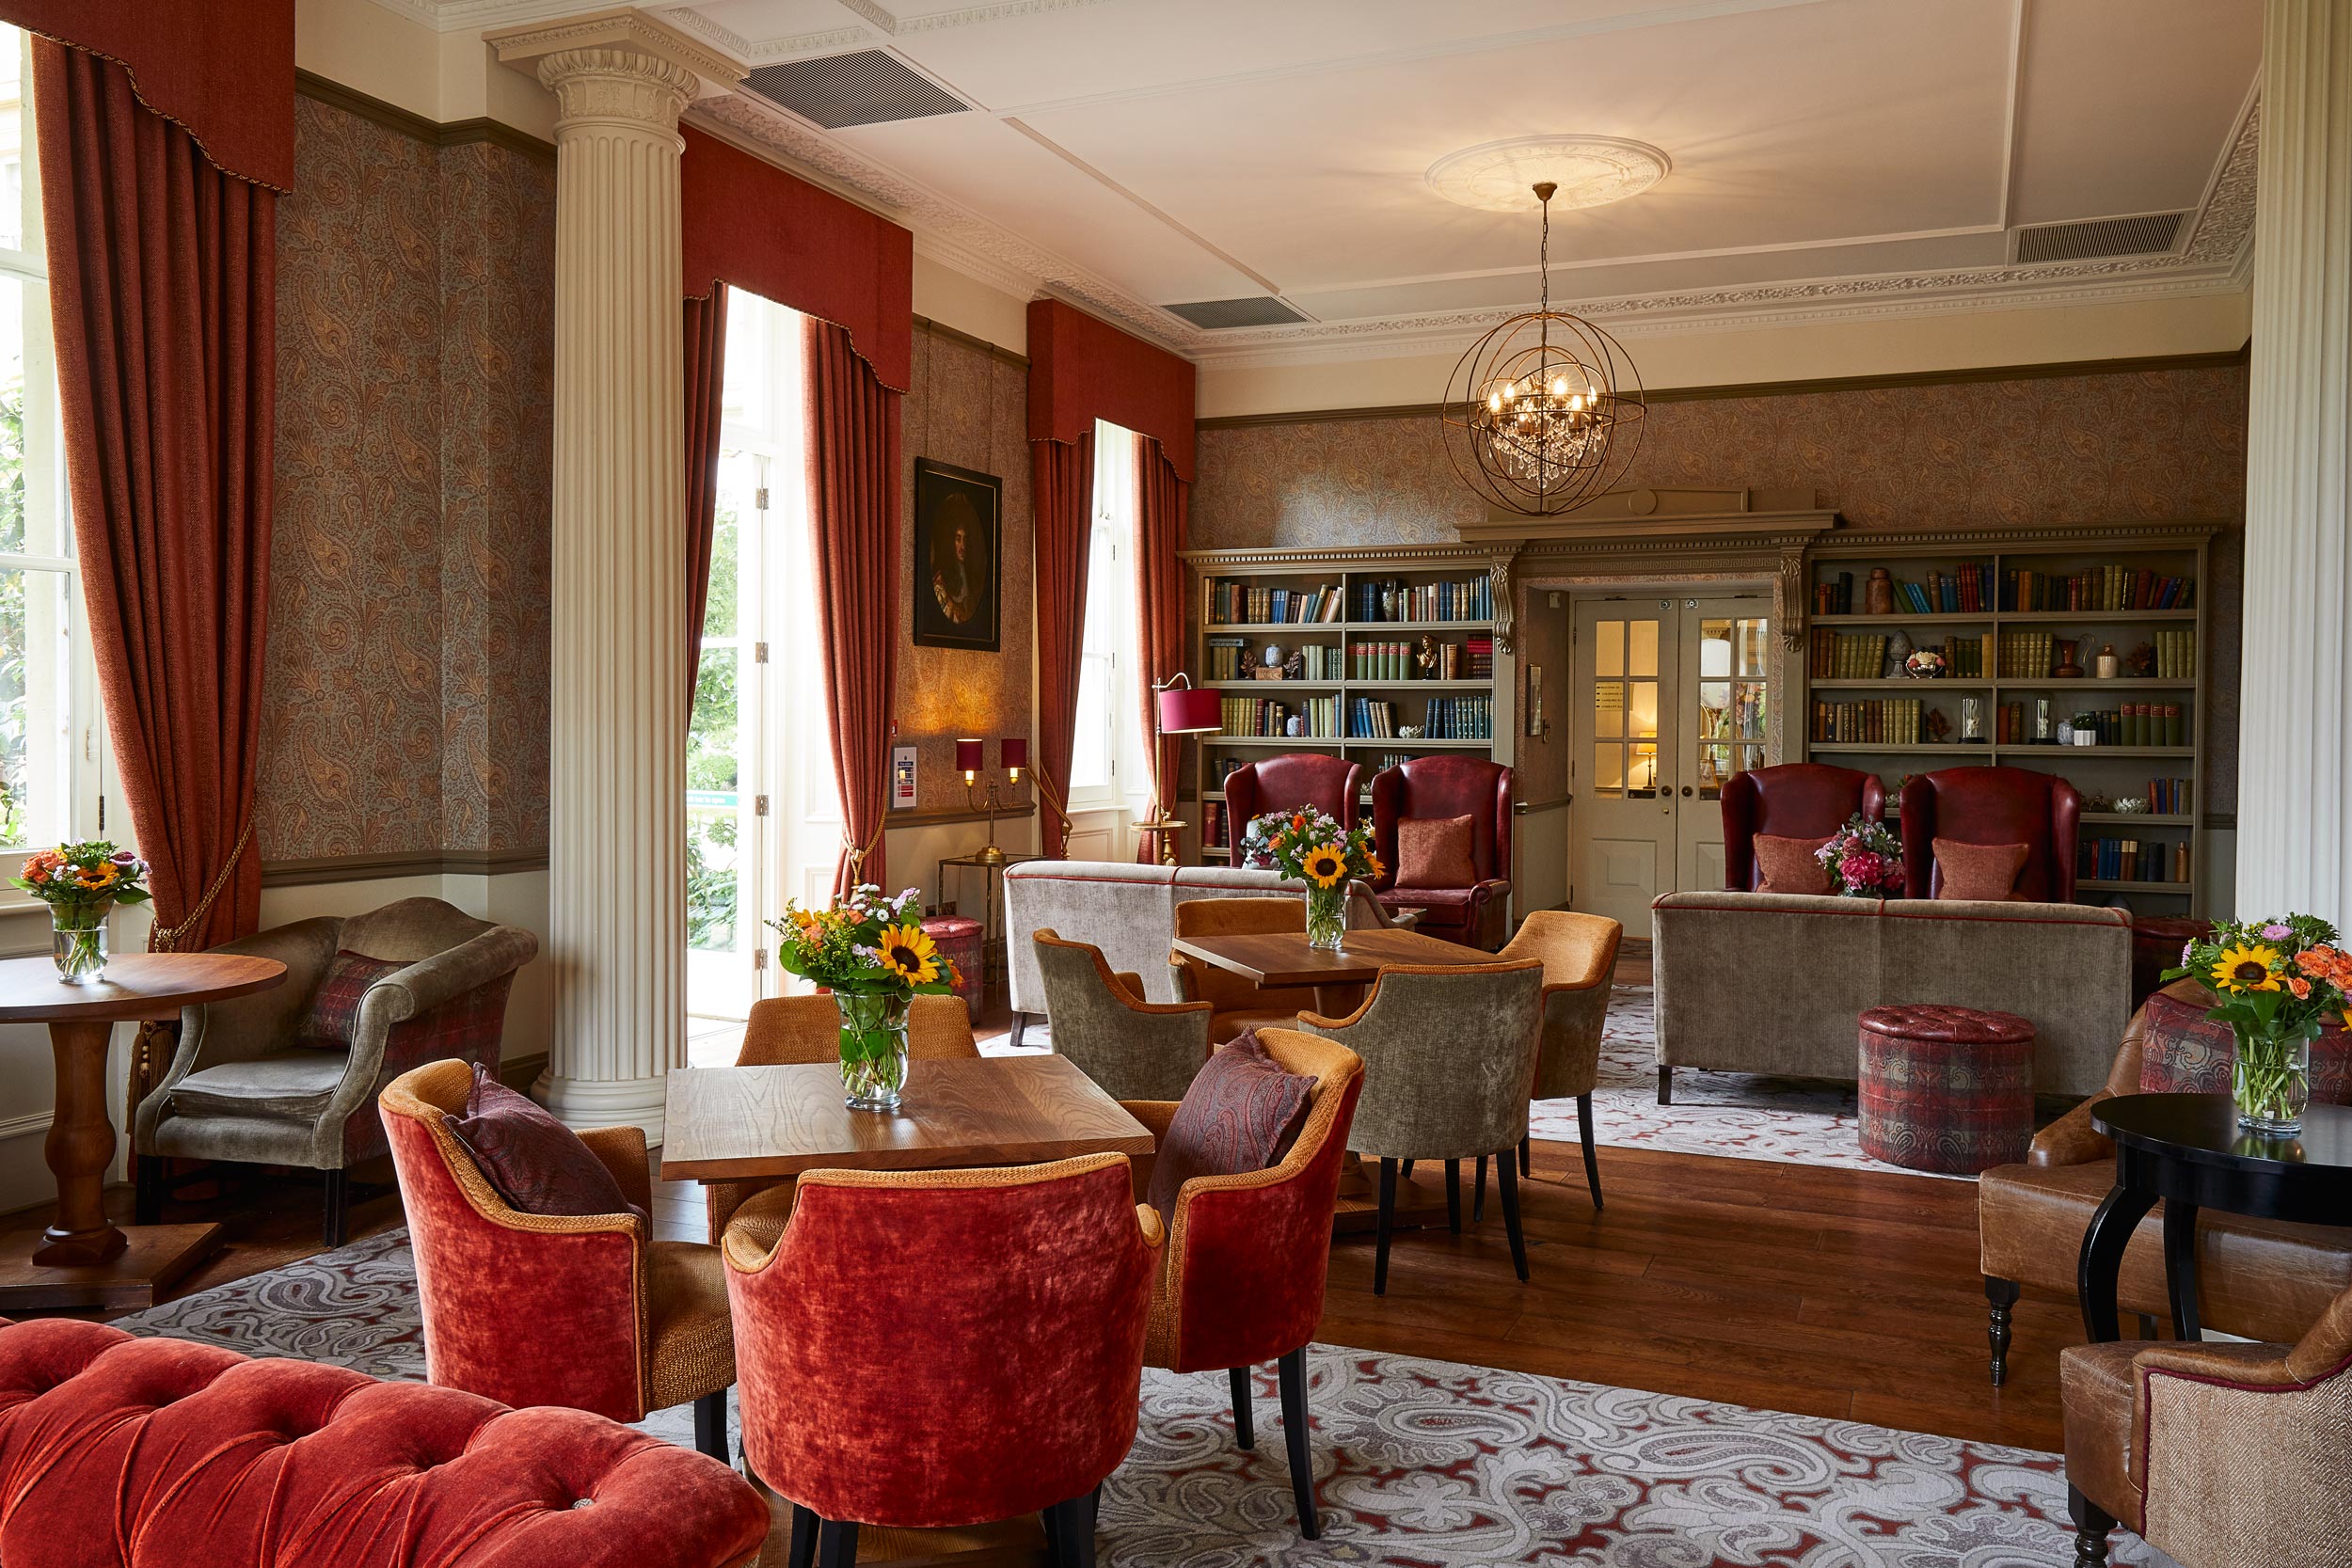 Bath Spa Hotel Lounge and Terrace, Alastair Ferrier photographer, hospitality interiors photographer.